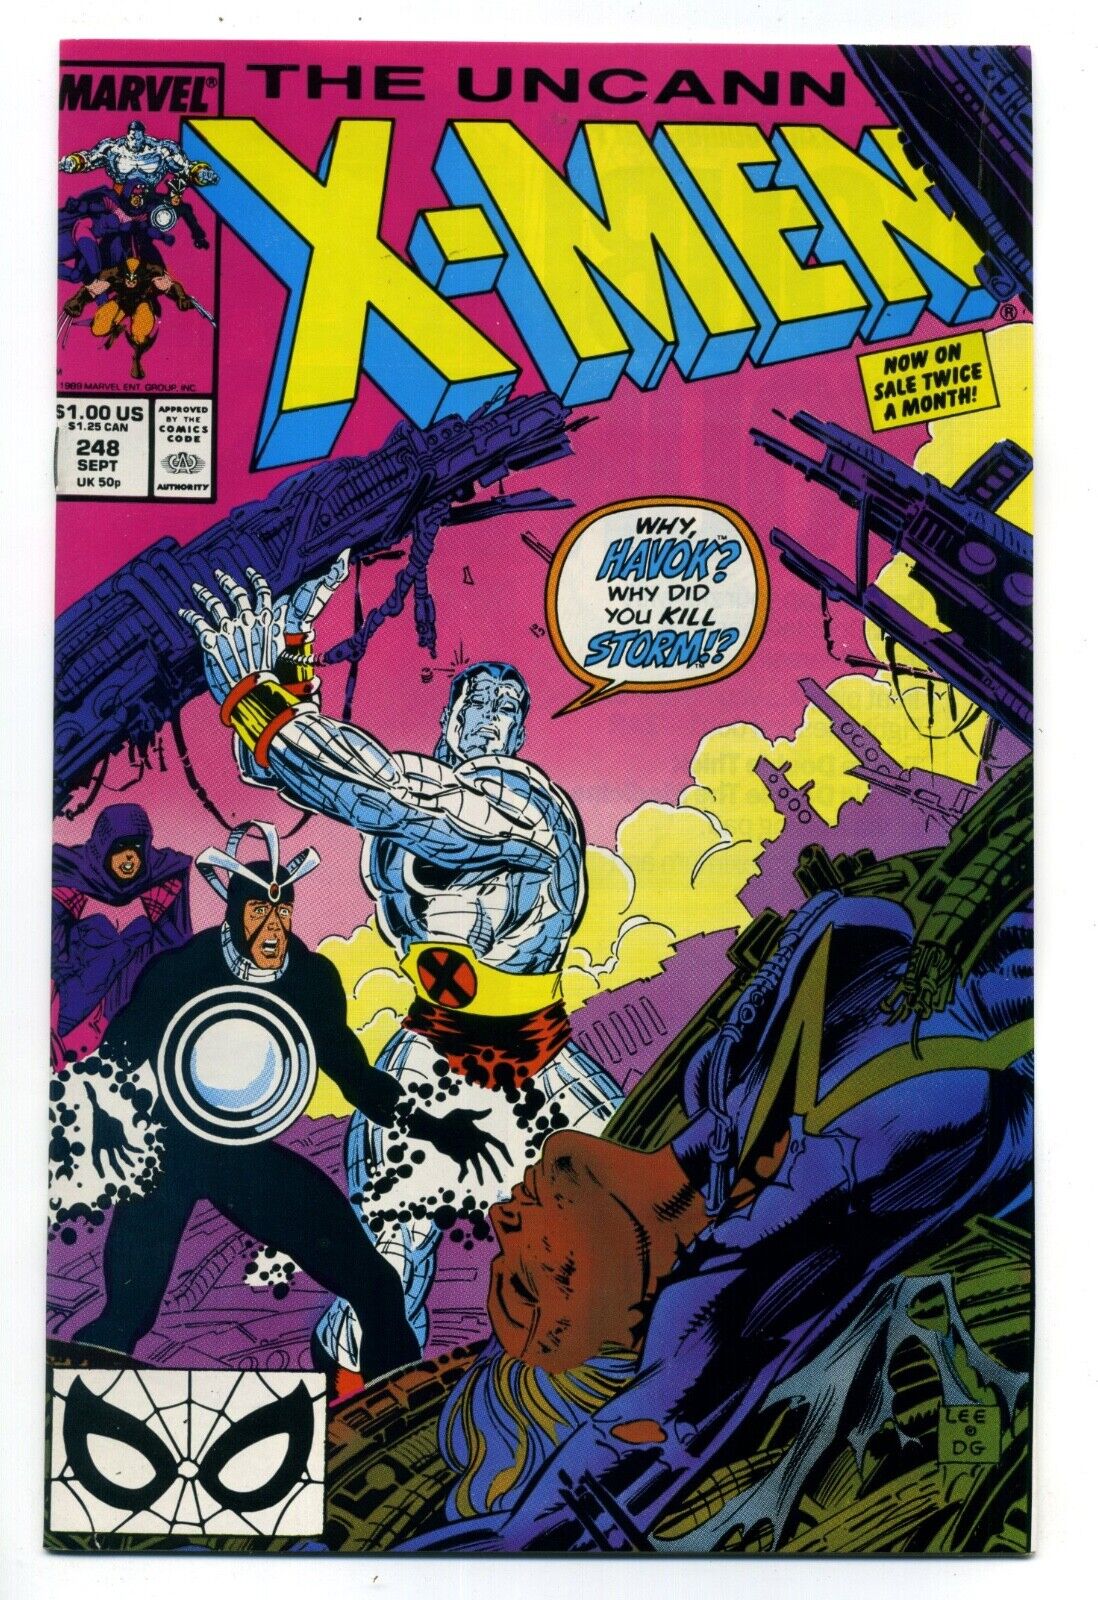 UNCANNY X-MEN #248 ~ 1st Jim Lee Art 1989 Key Marvel Comic WOLVERINE! NM 9.2 ++